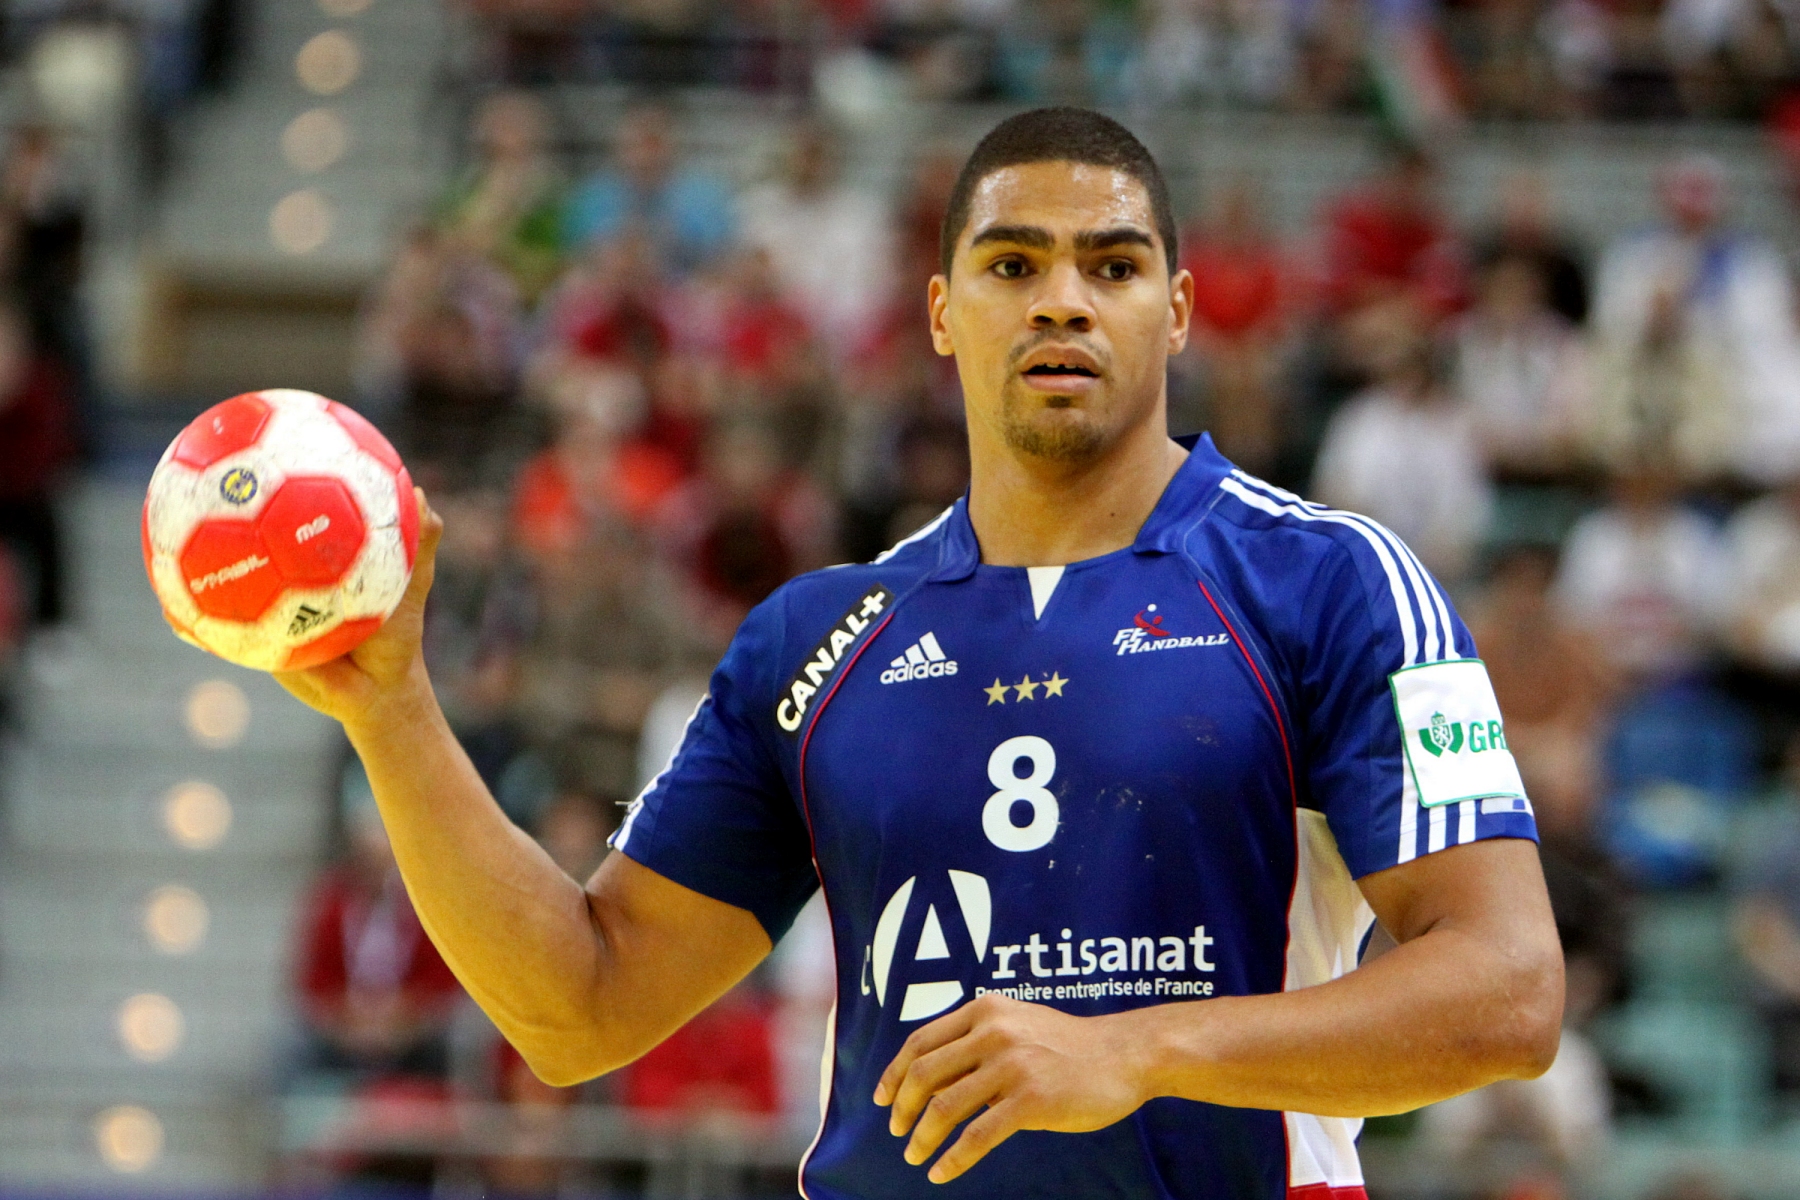 FileDaniel Narcisse (THW Kiel) Handball player of France (2).jpg